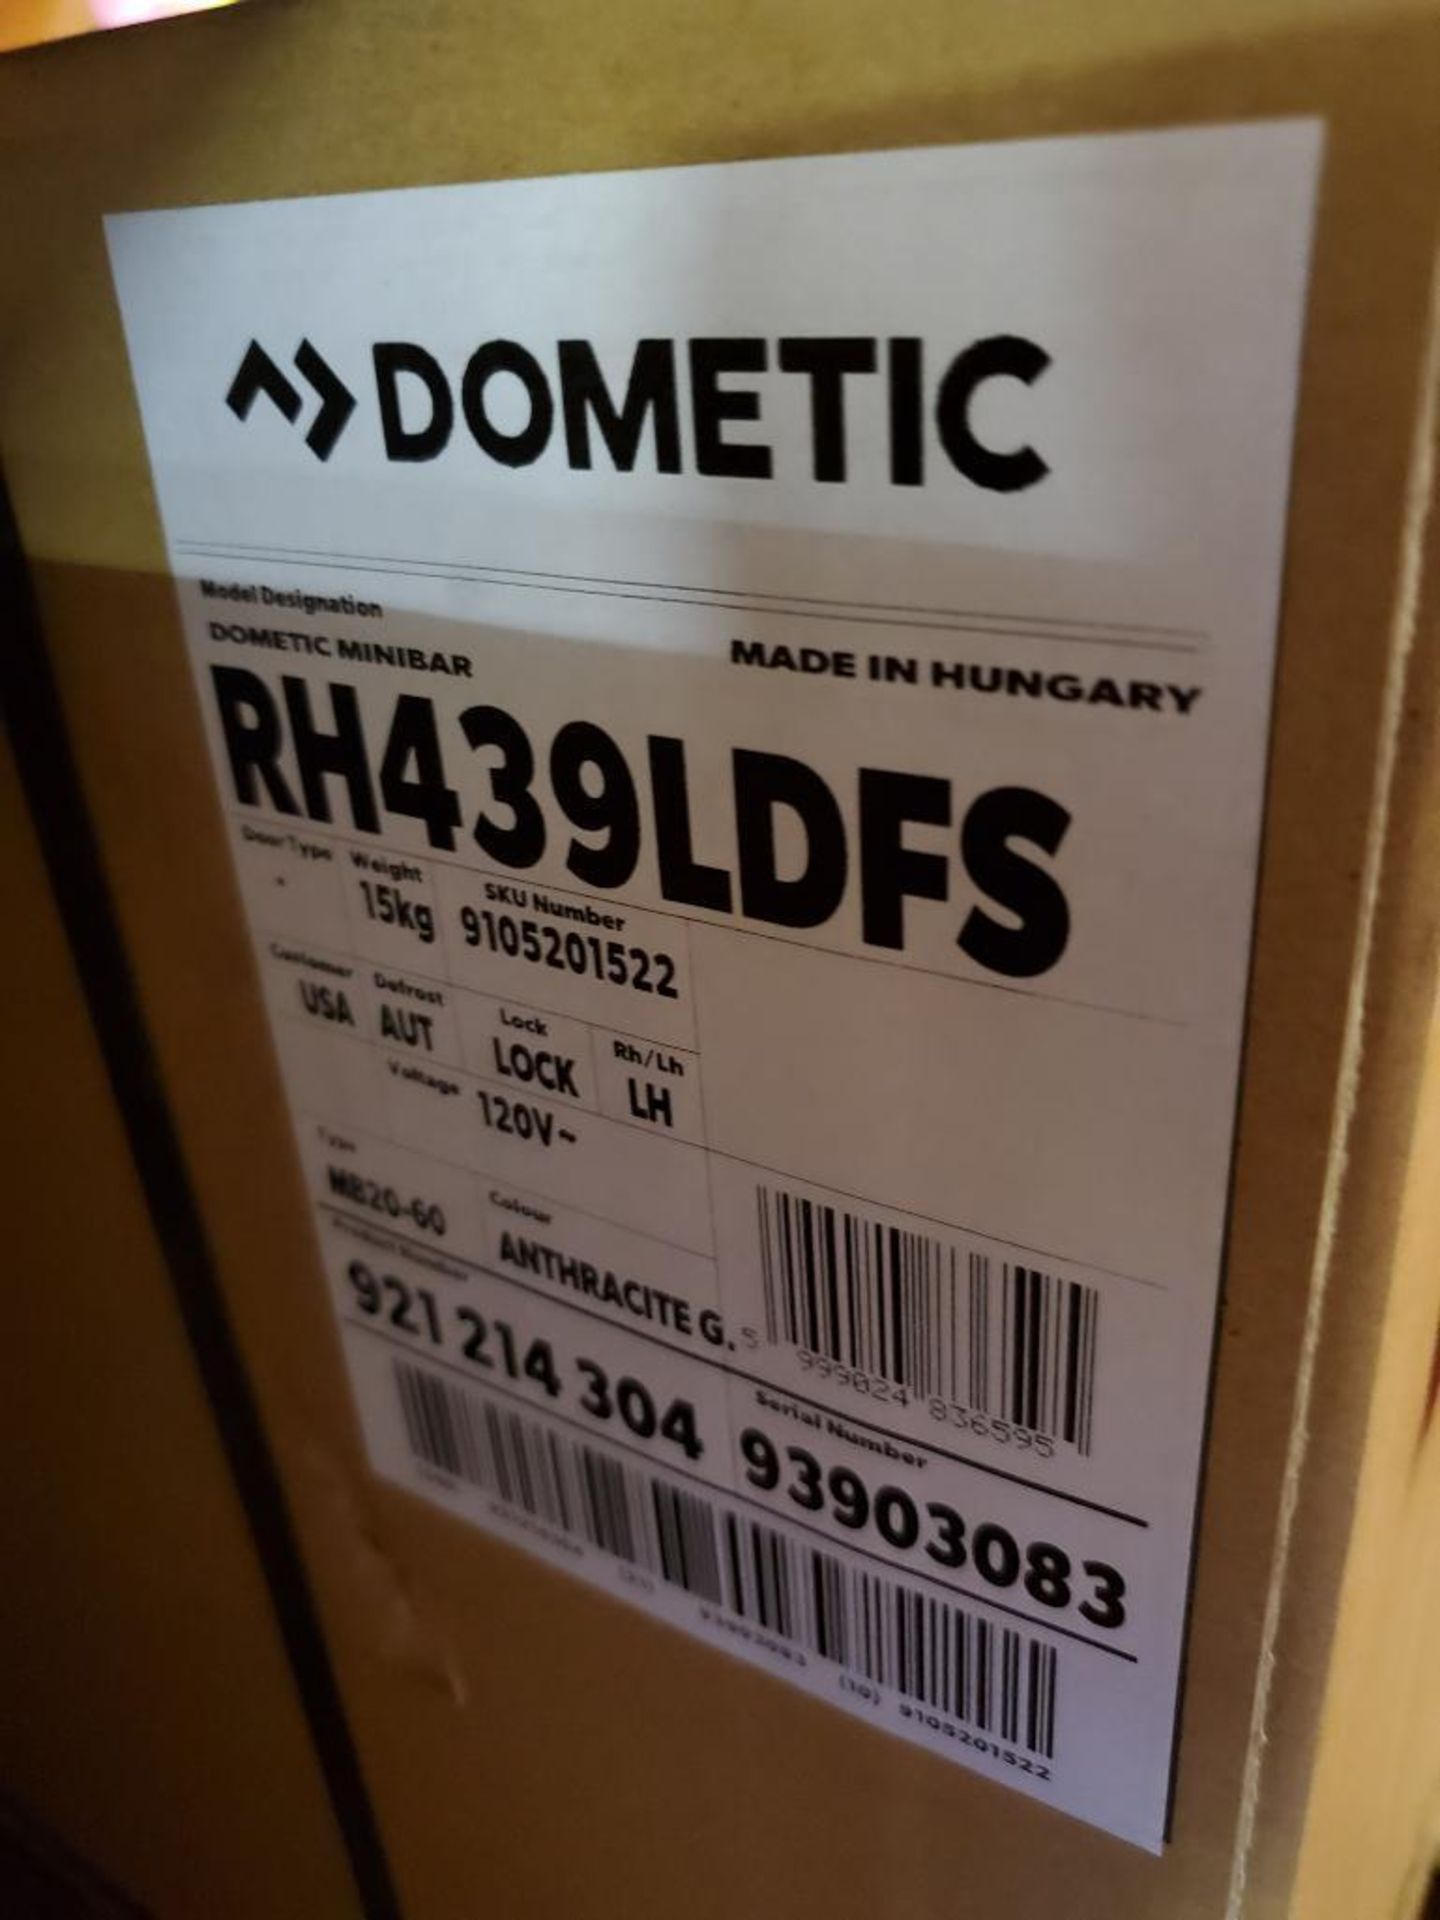 Qty 4 - Dometic minibar. Model RH449LDFS. 120v. New in box. - Image 4 of 4